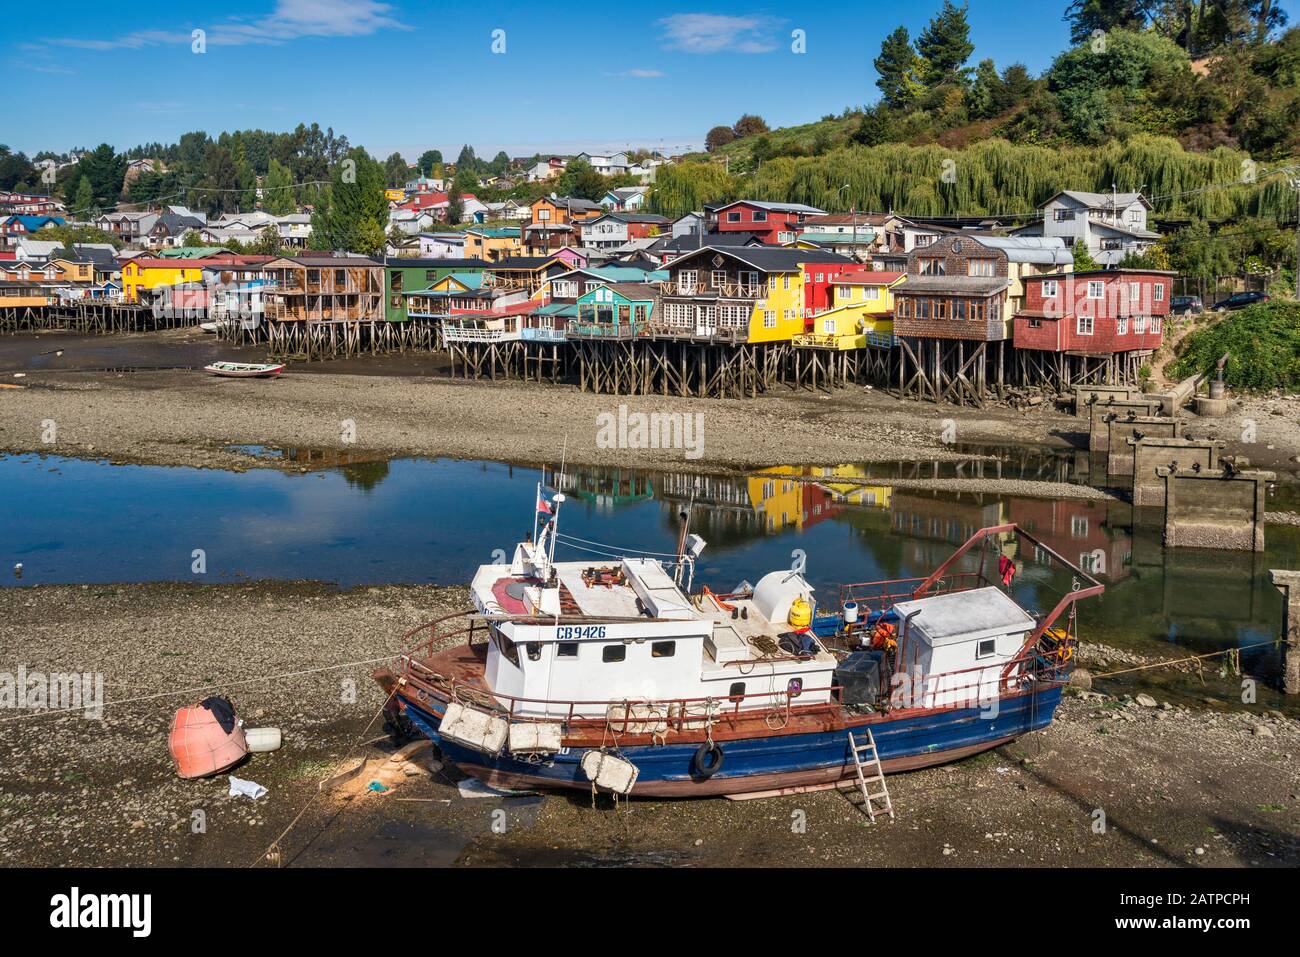 Fishing boat at low tide, palafitos, wooden stilt houses in Castro, Isla Grande de Chiloe, Los Lagos Region, Patagonia, Chile Stock Photo